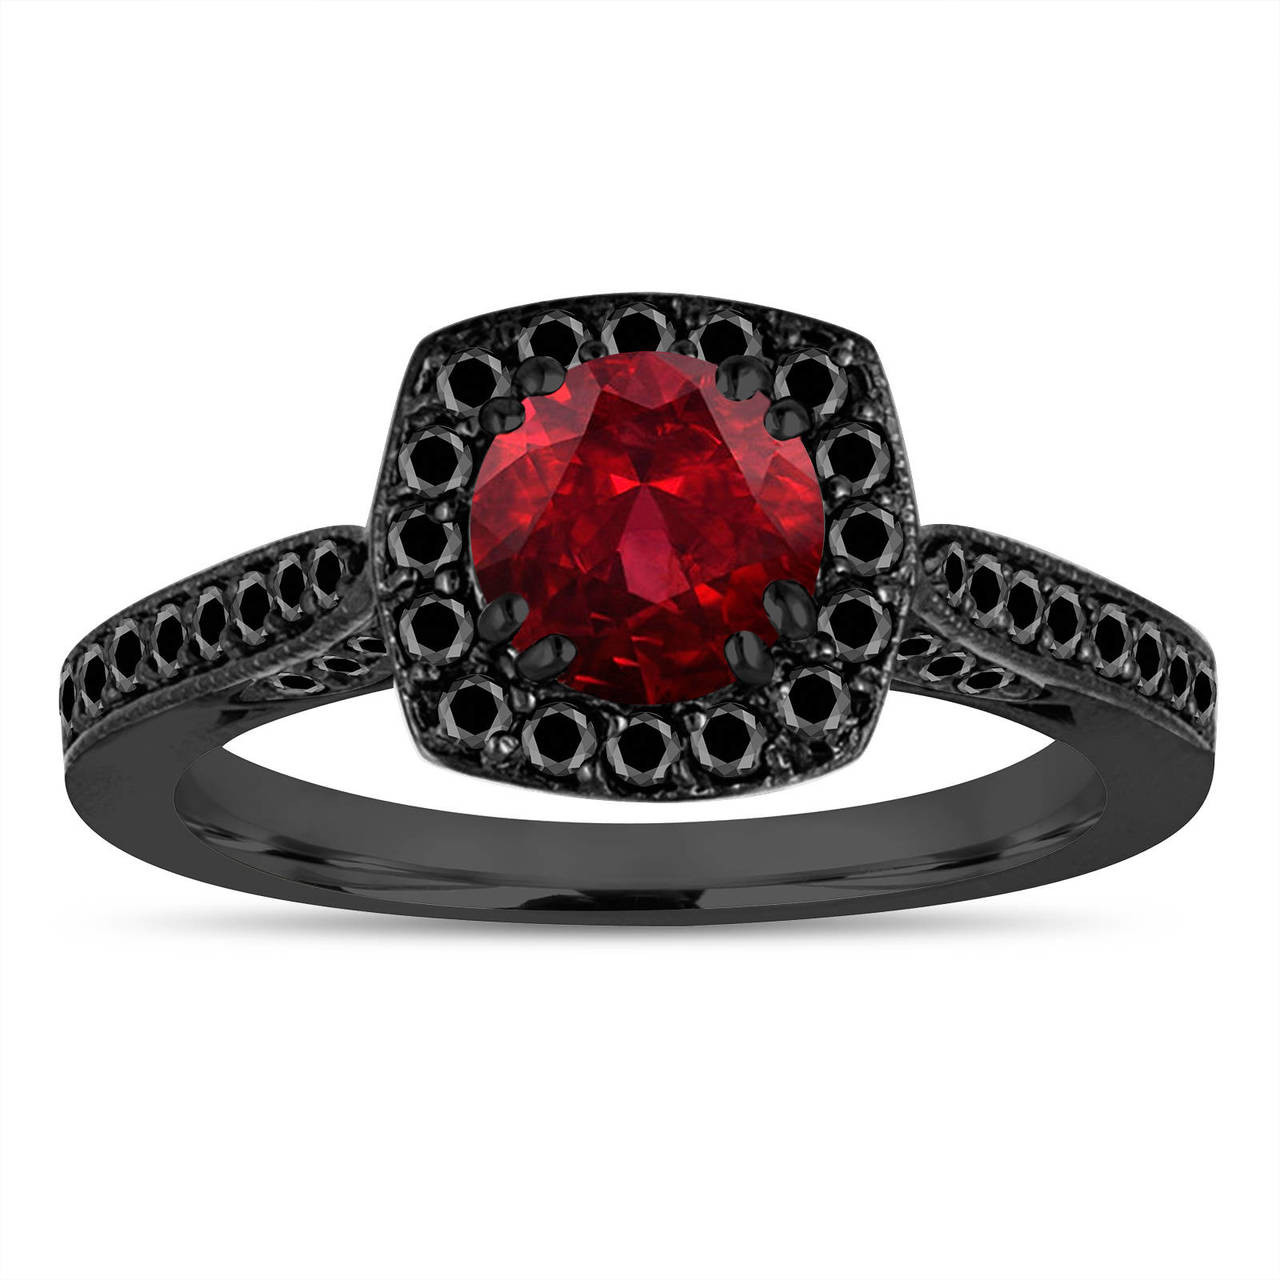 Vintage Style Garnet Engagement Ring Wedding Ring Cocktail Ring 14K Black Gold 1.41 Carat Certified Halo Pave 77879.1569426224